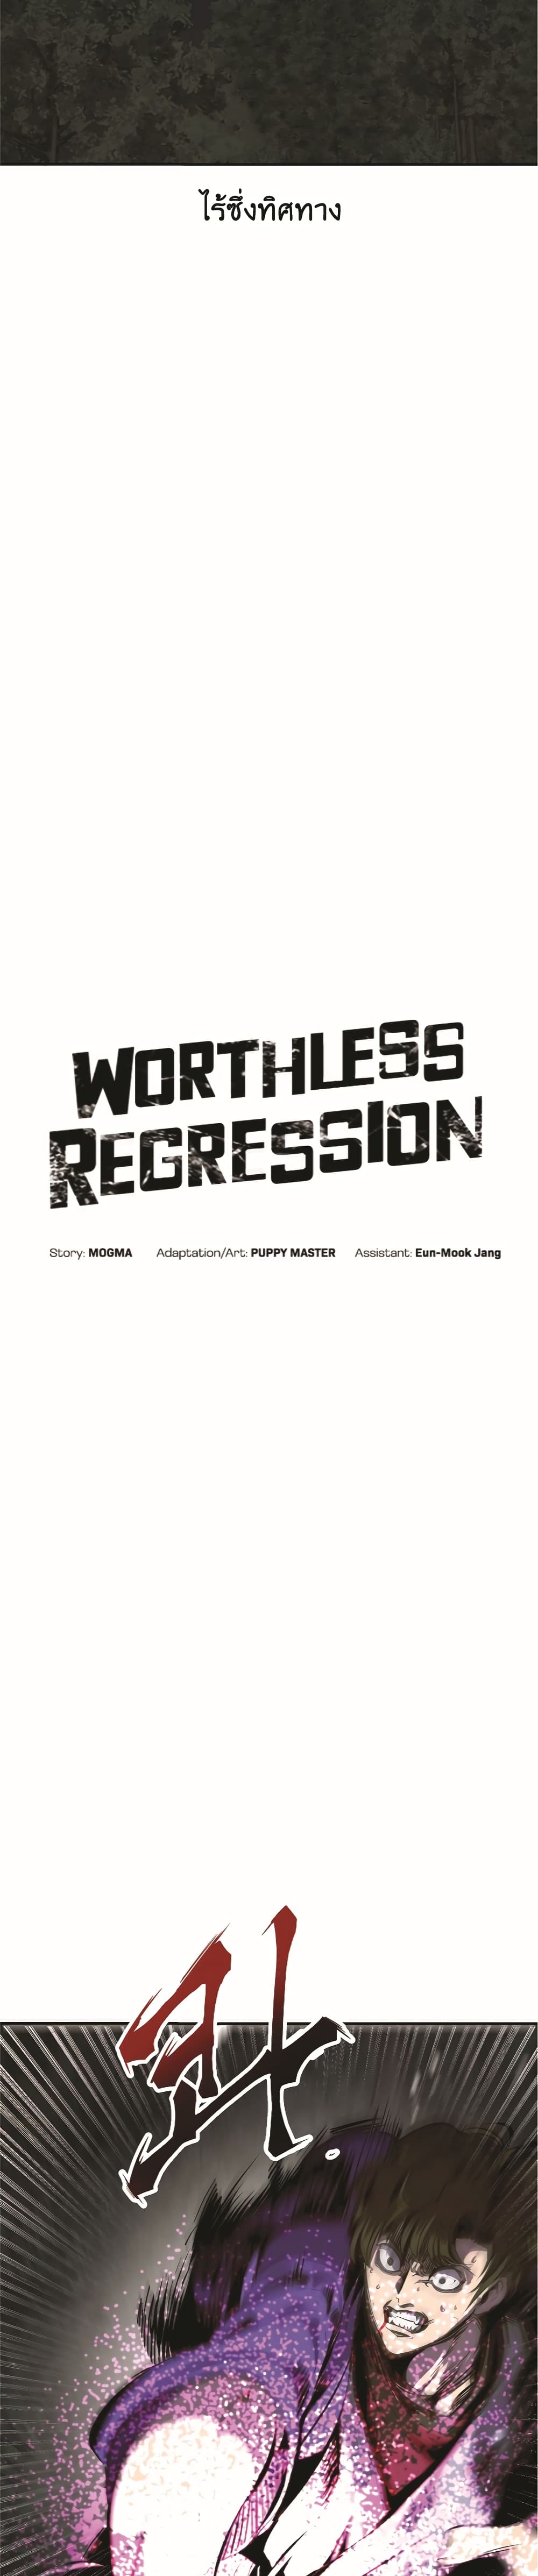 Worthless Regression 47-47